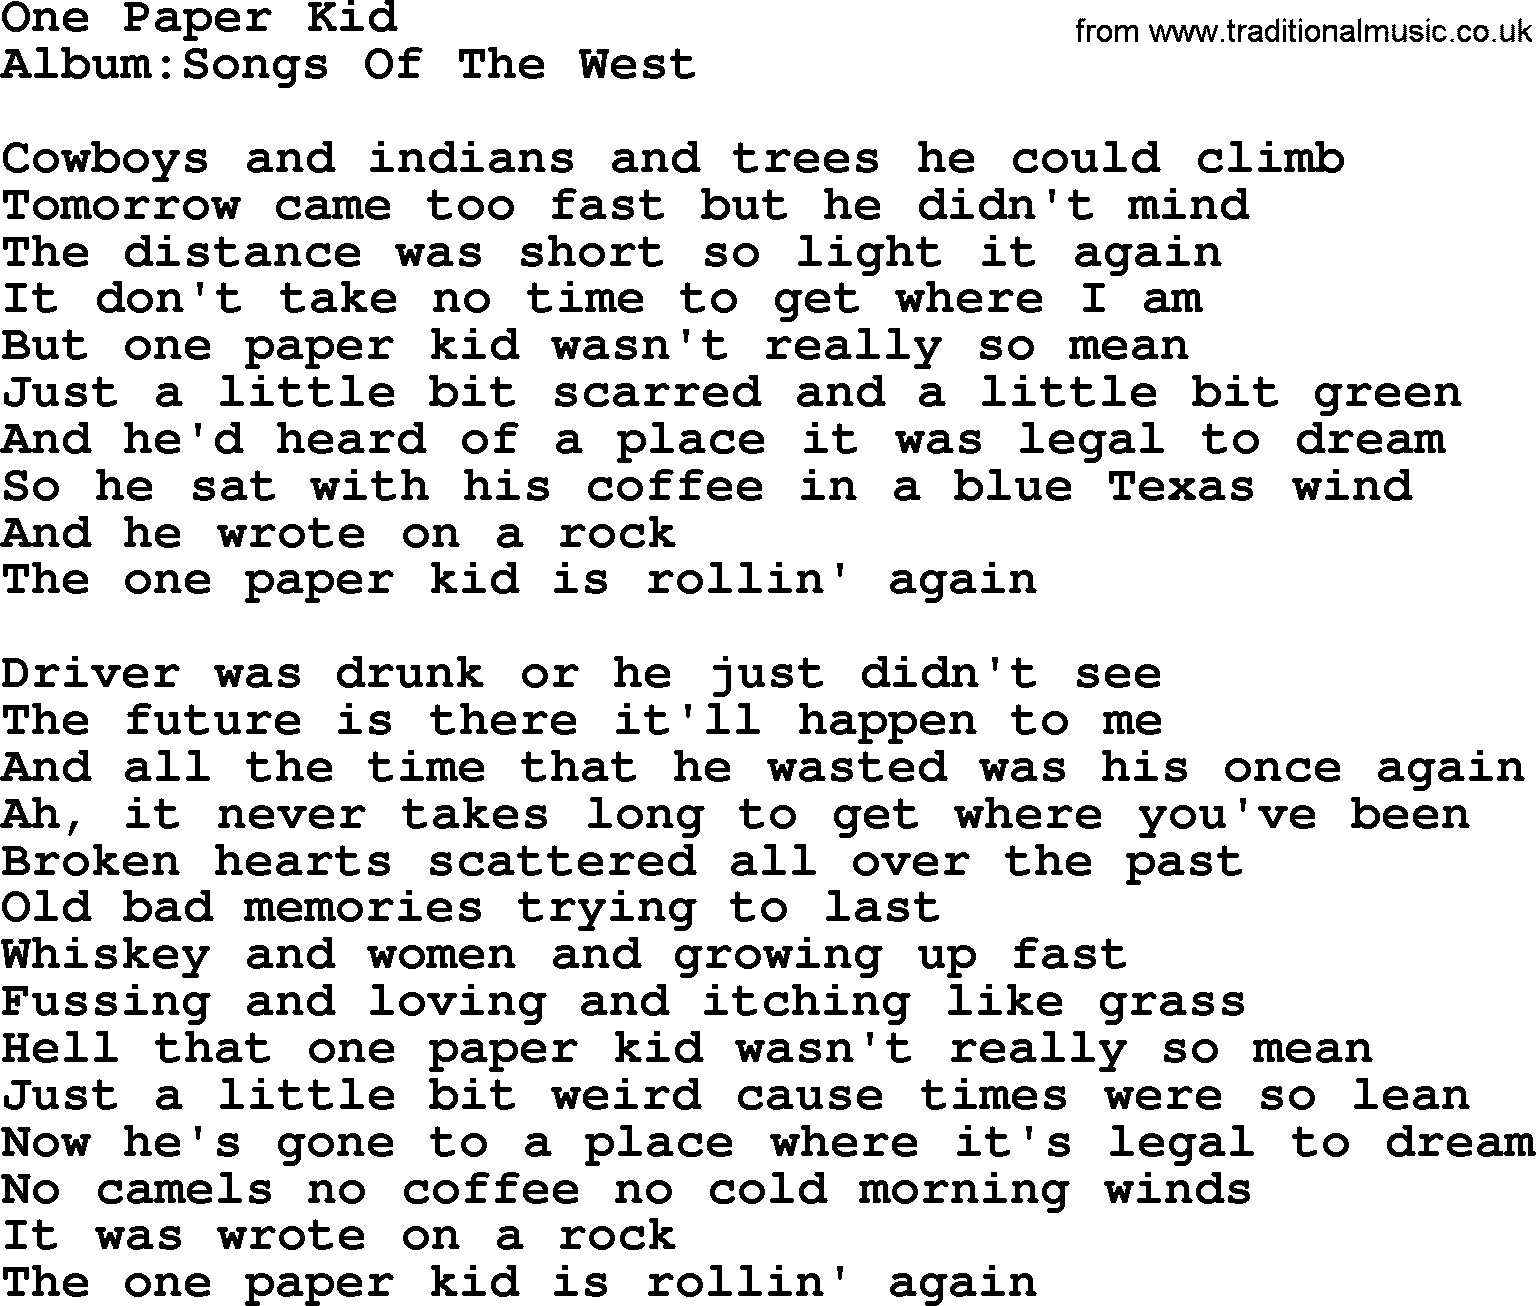 Emmylou Harris song: One Paper Kid lyrics